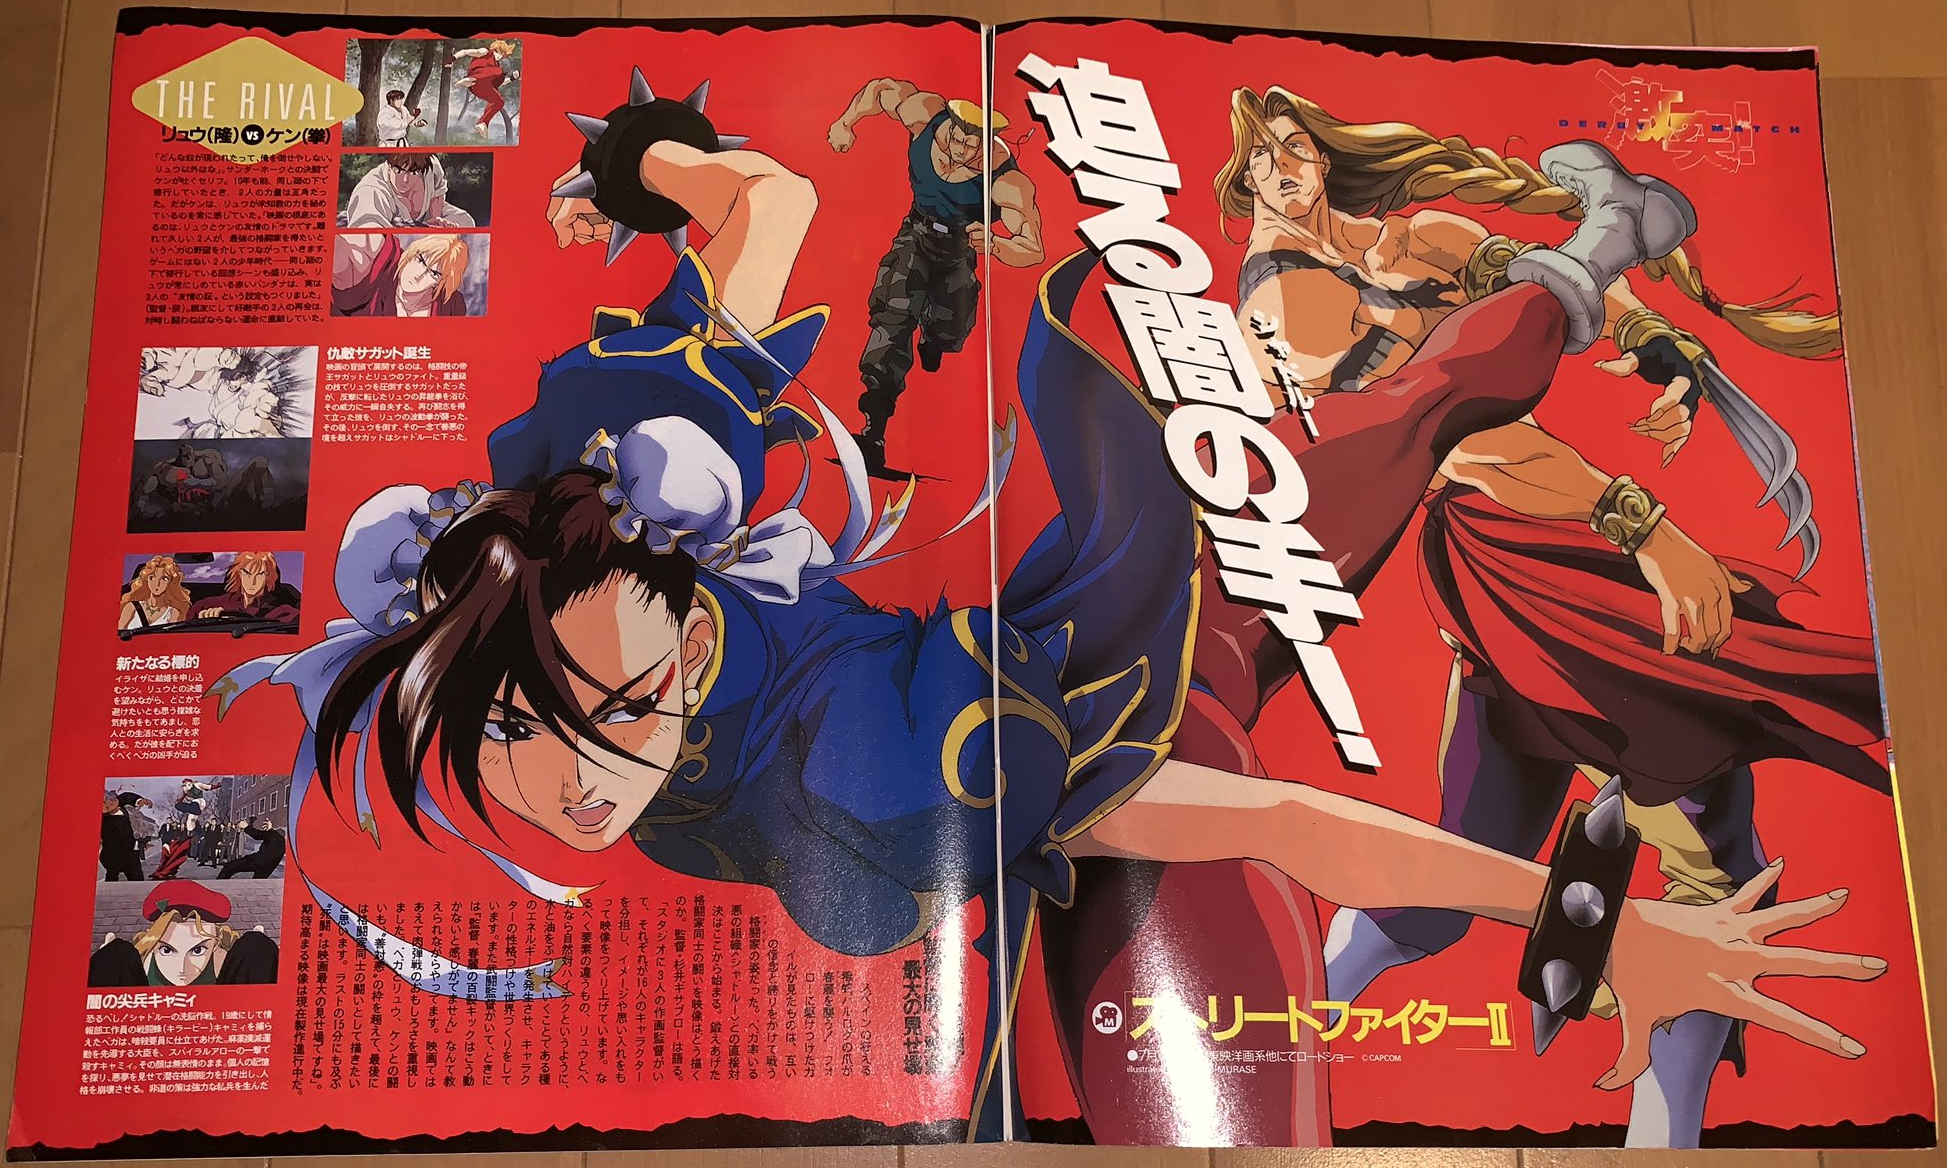 Street Fighter II: Animated Movie Chun-Li vs Vega, best game to